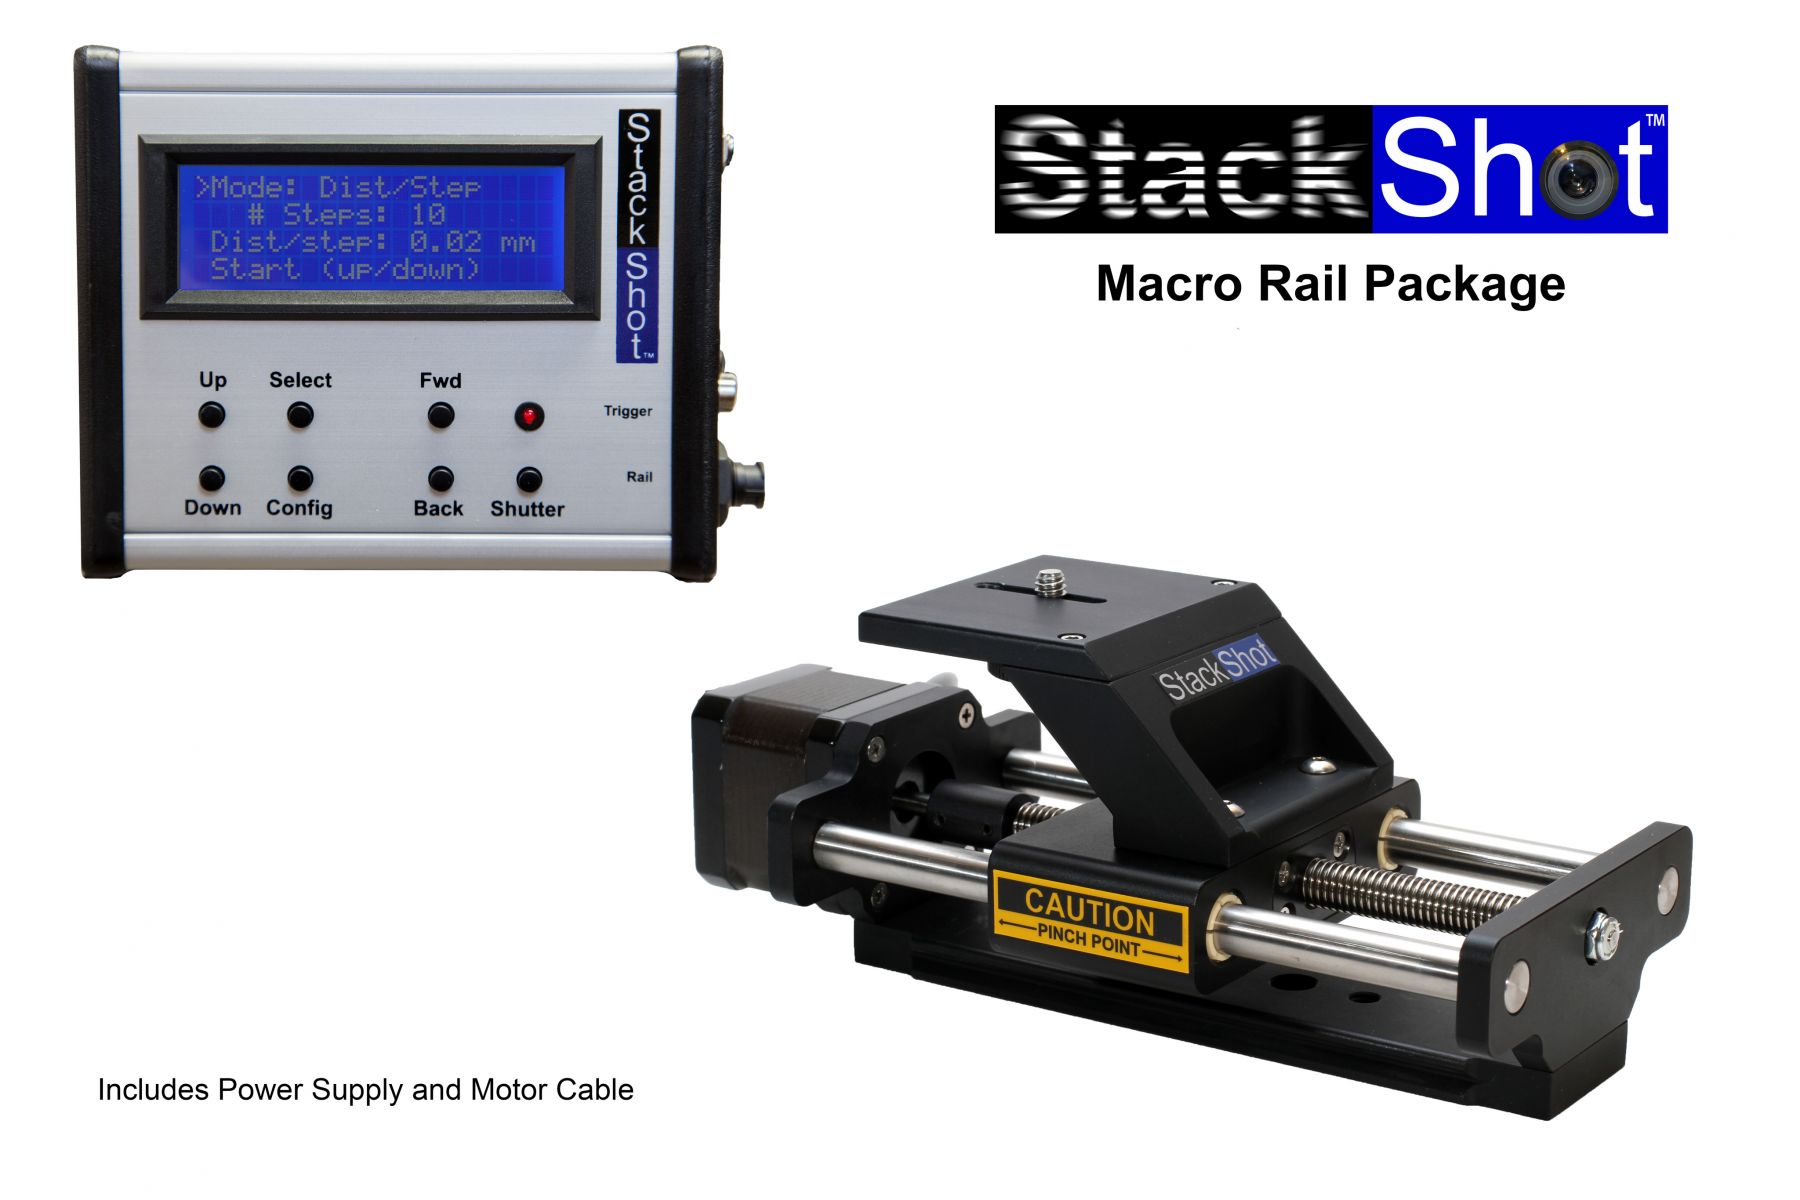 célula Vendedor casado StackShot Macro Rail Package